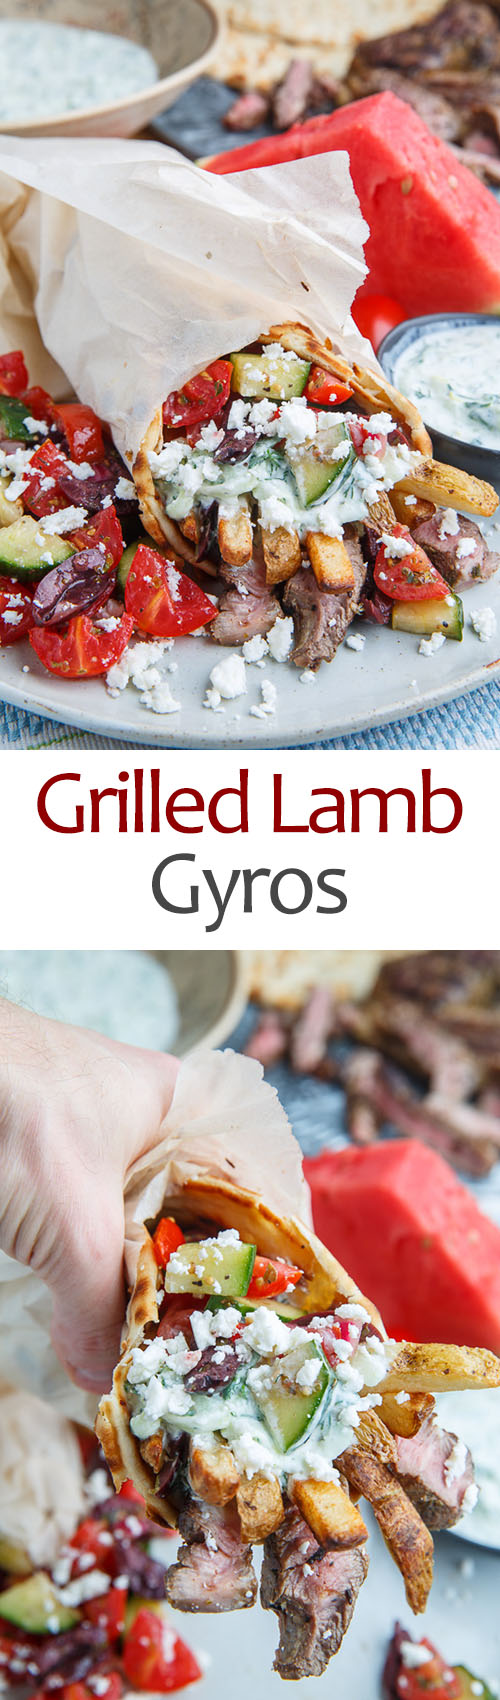 Grilled Lamb Gyros